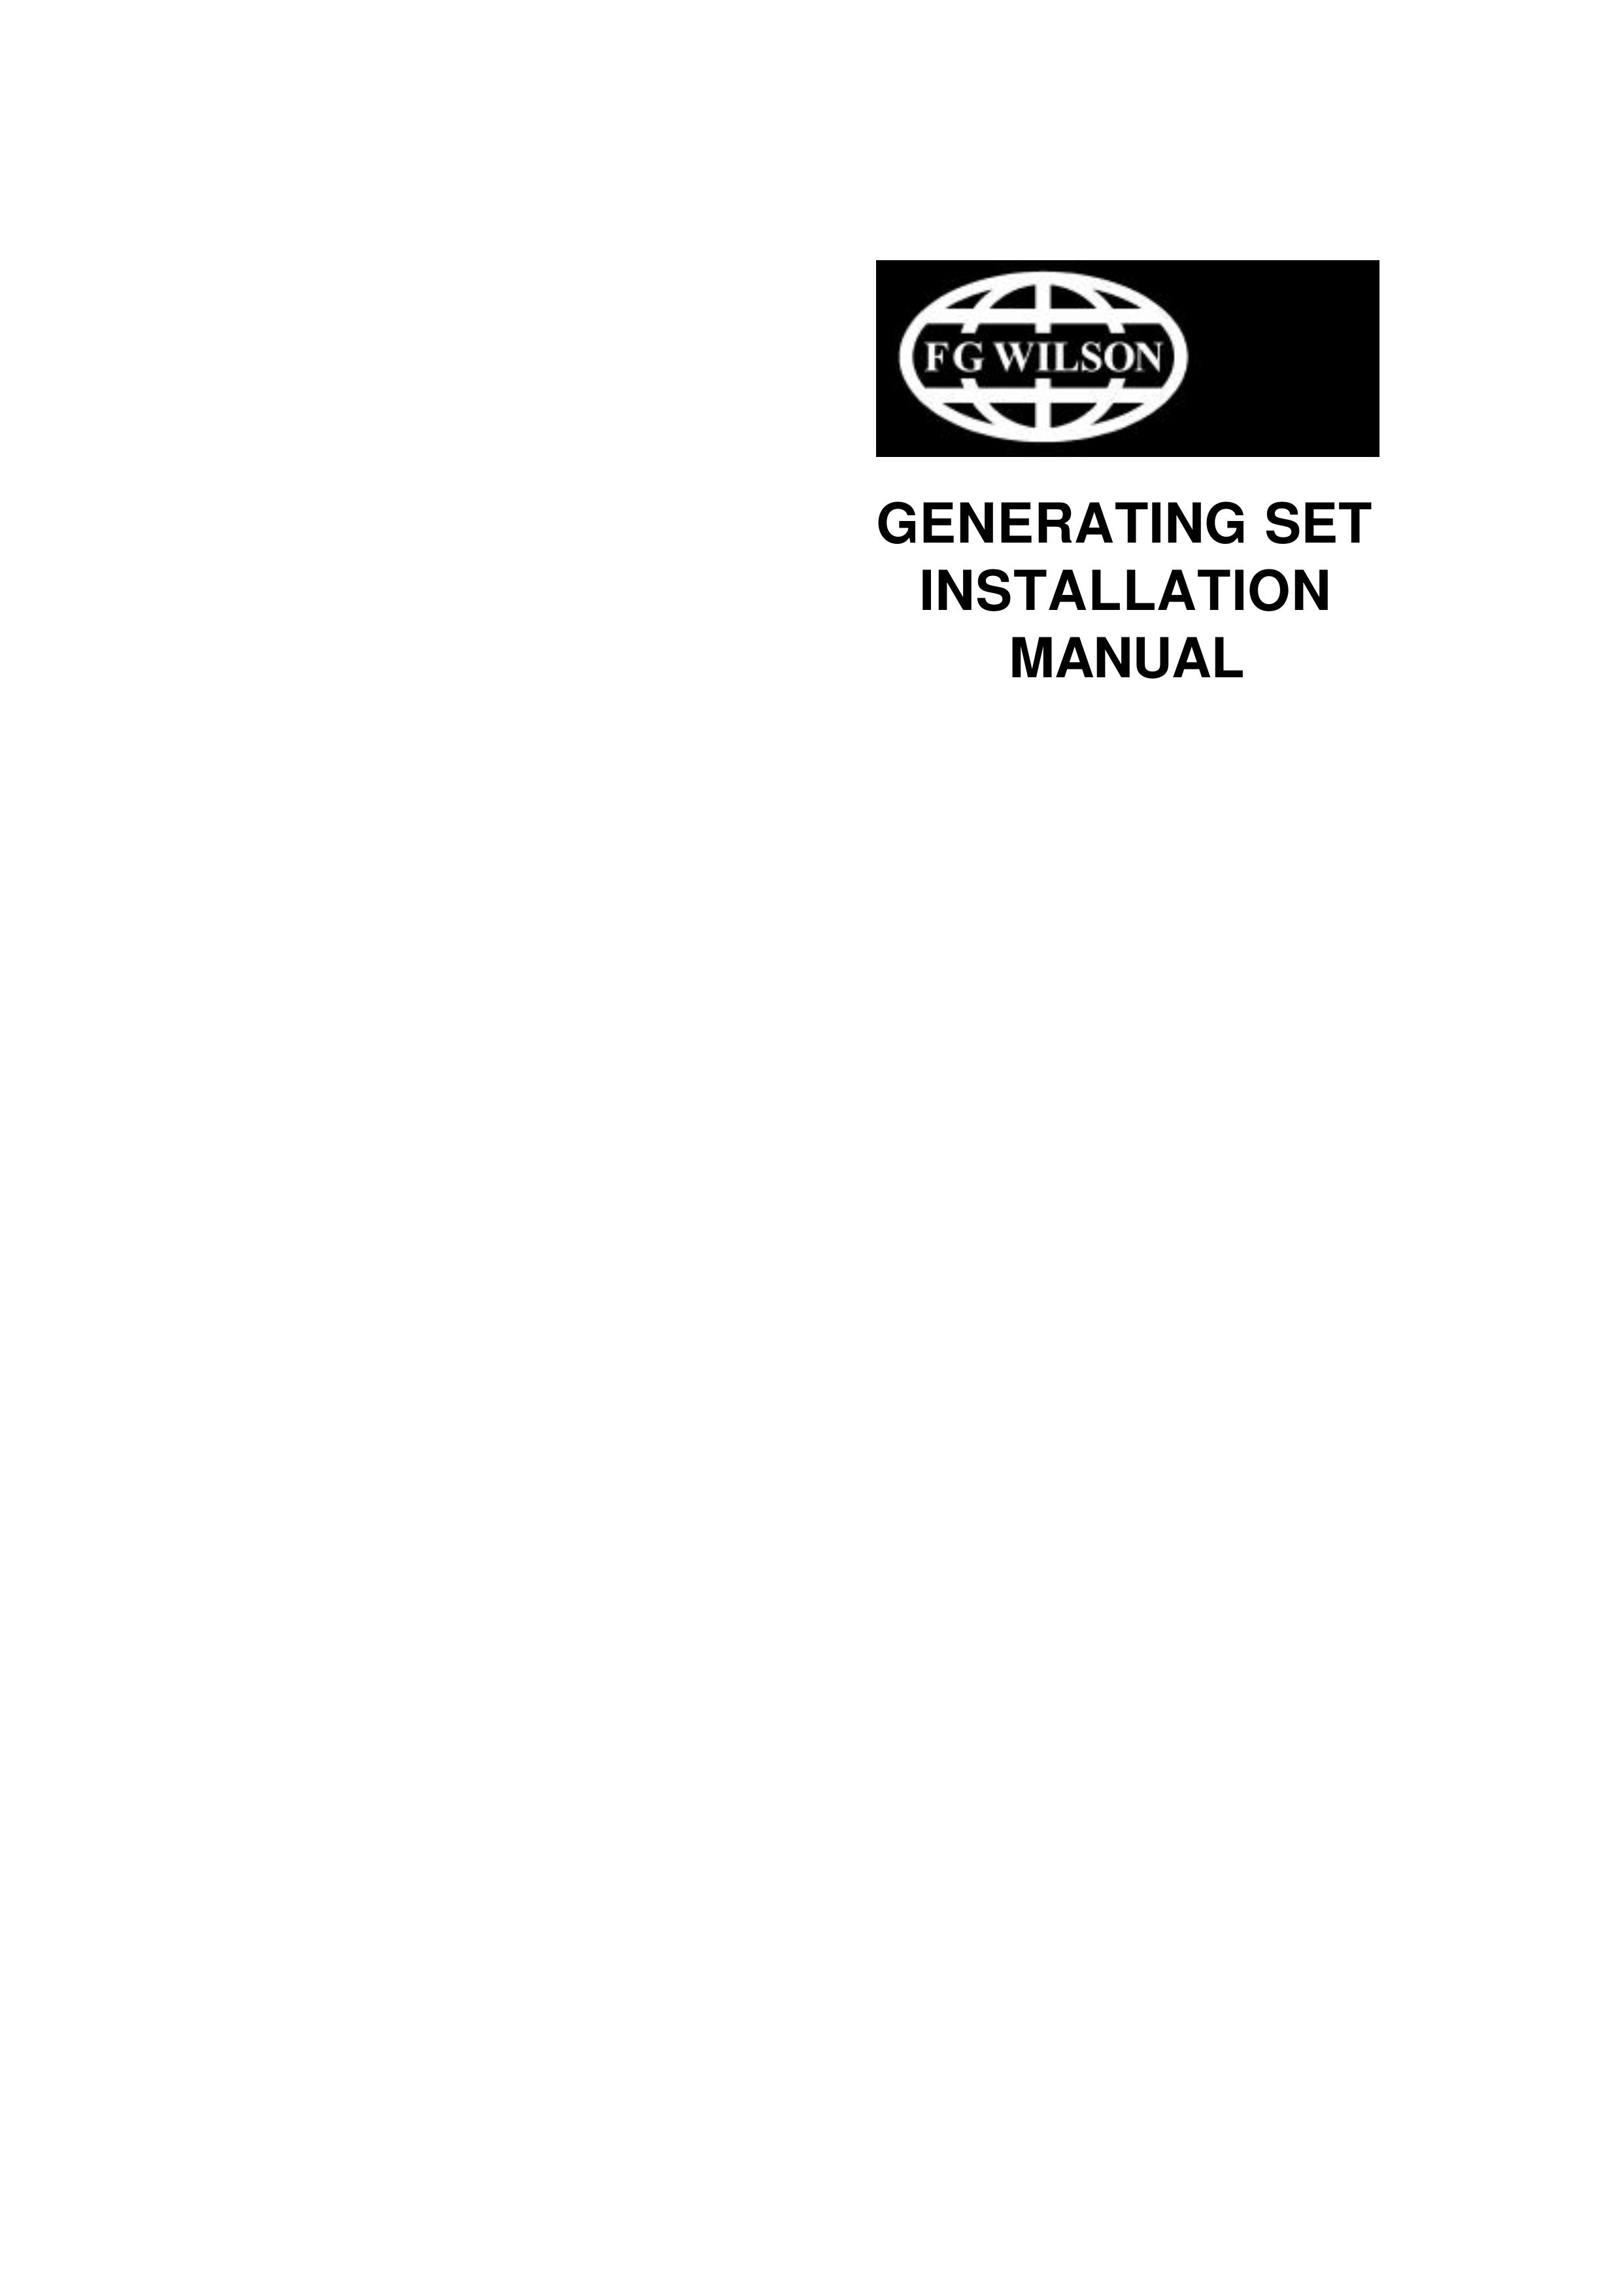 HP (Hewlett-Packard) Generating Set Portable Generator User Manual